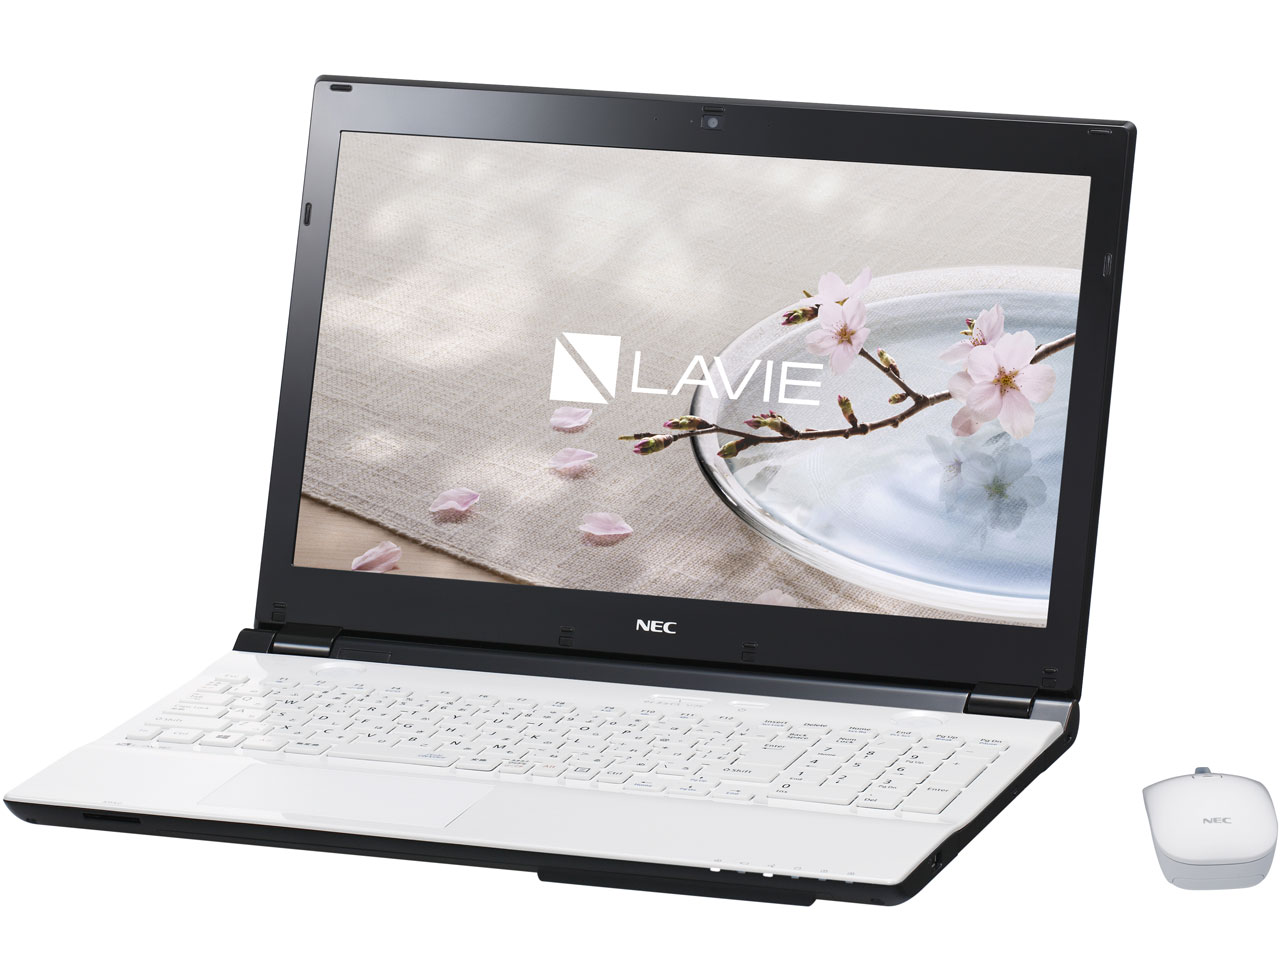 NEC LAVIE Note Standard NS700/DAR PC-NS700DAR [クリスタルレッド] 価格比較 - 価格.com